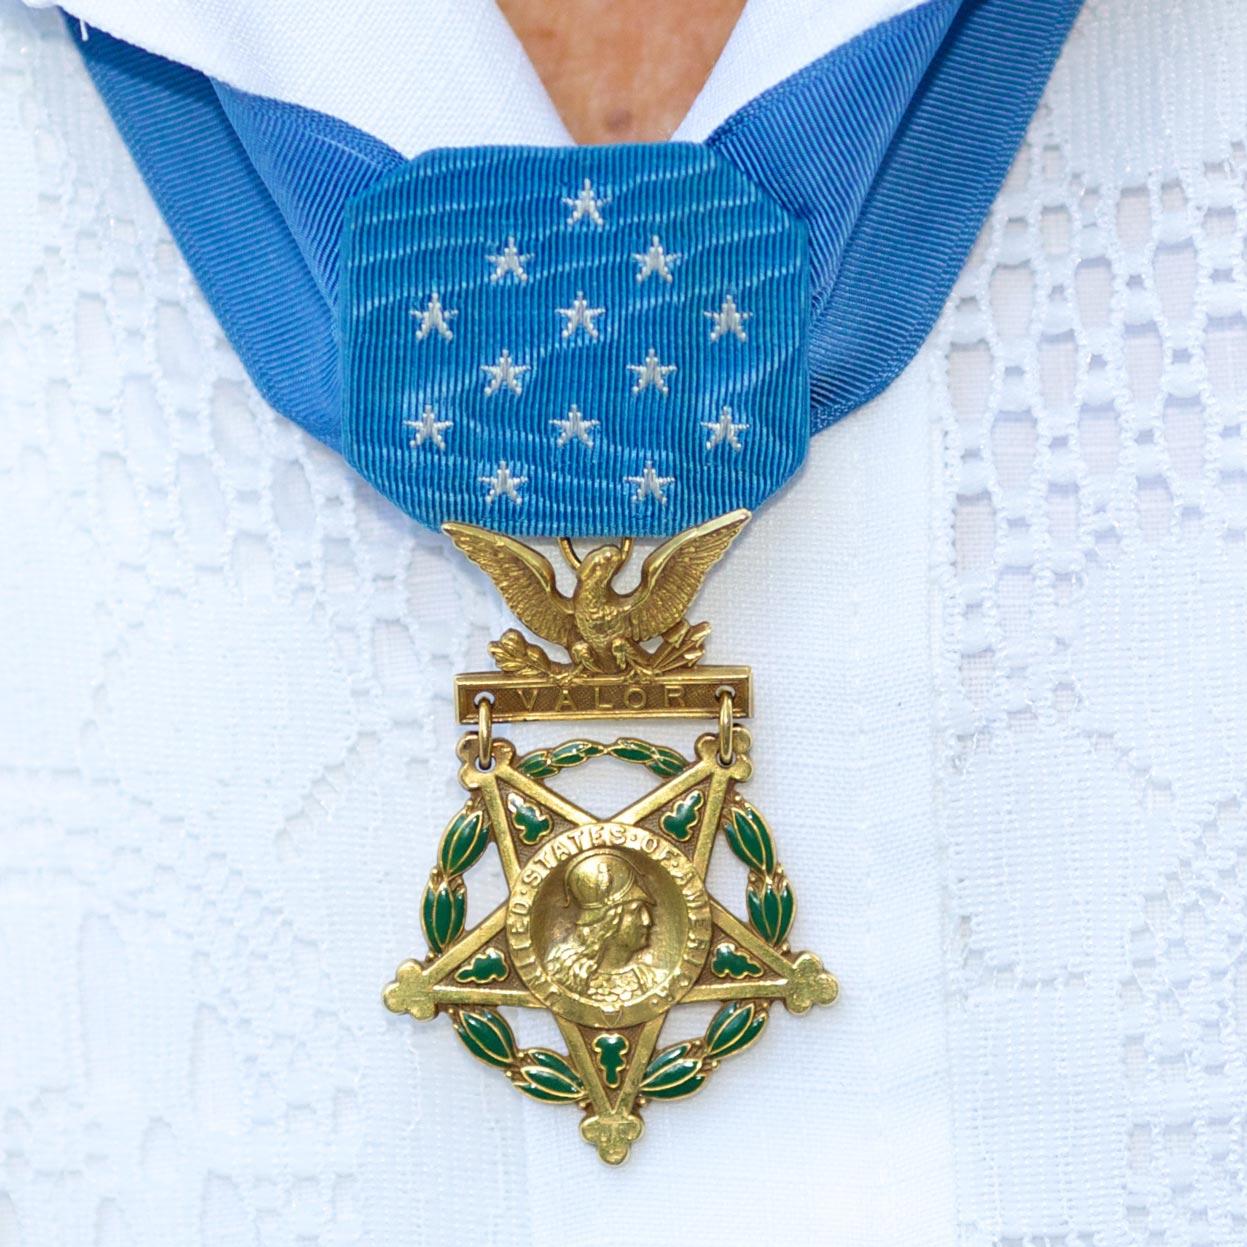 "Hershey Miyamura's Medal of Honor - Nisei Week 2014" by --Mark-- is licensed under CC BY-NC-SA 2.0.